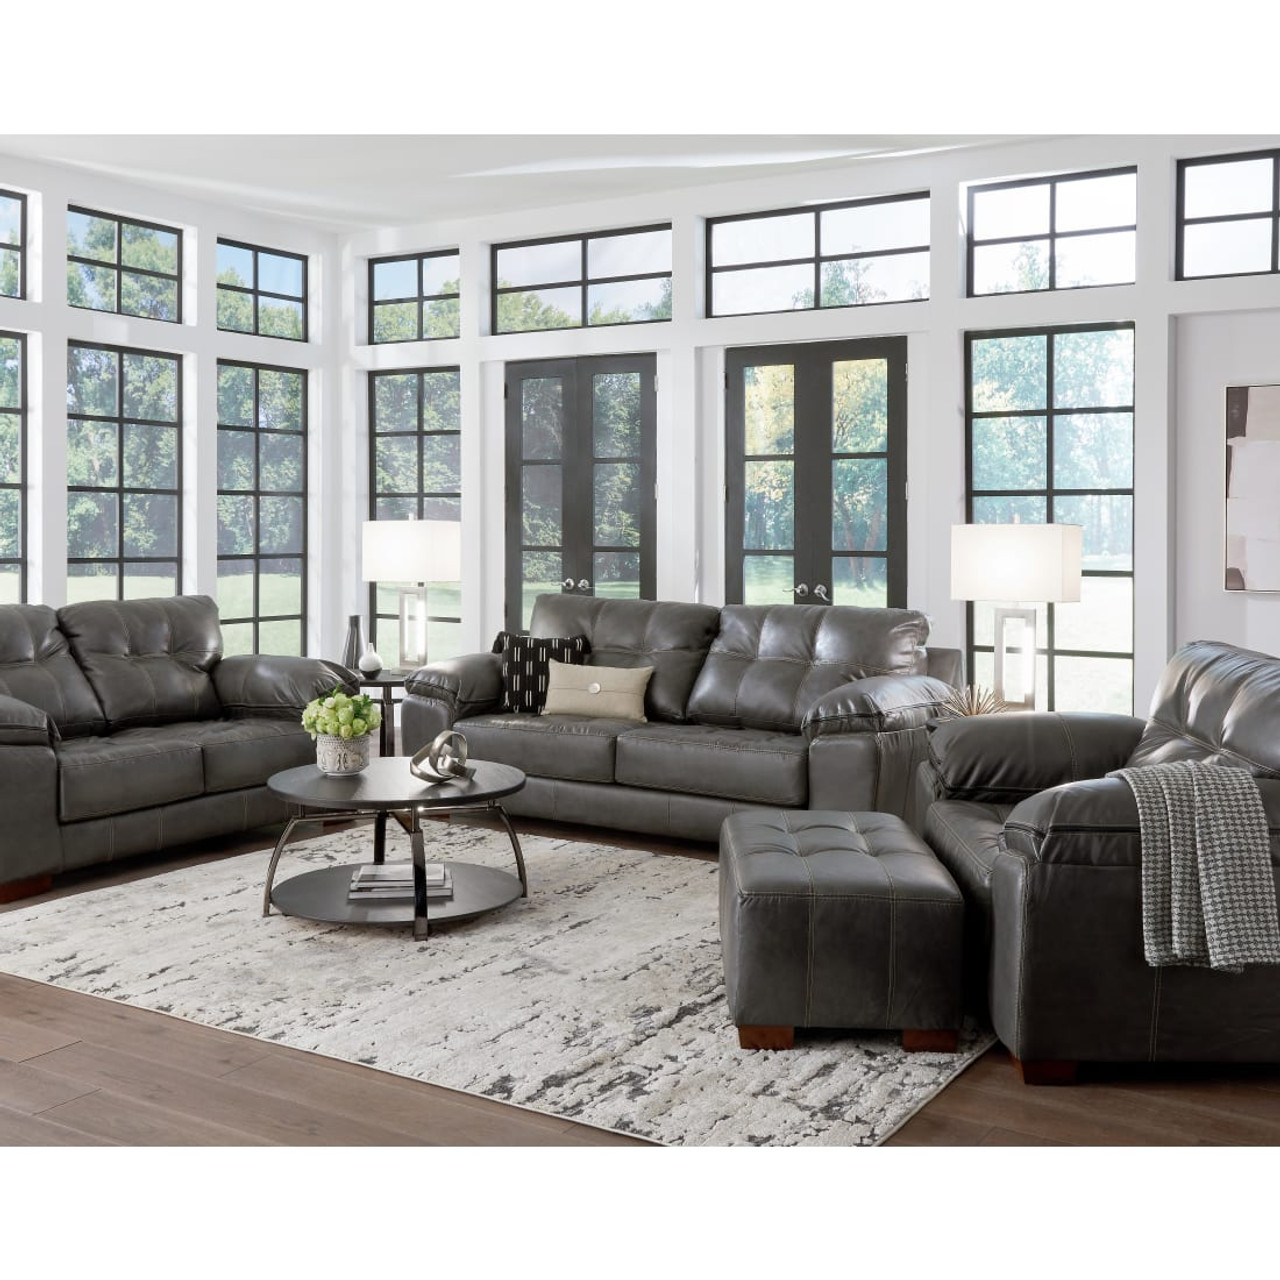 Buy Holman Sofa | Financing Options @ Conn's HomePlus